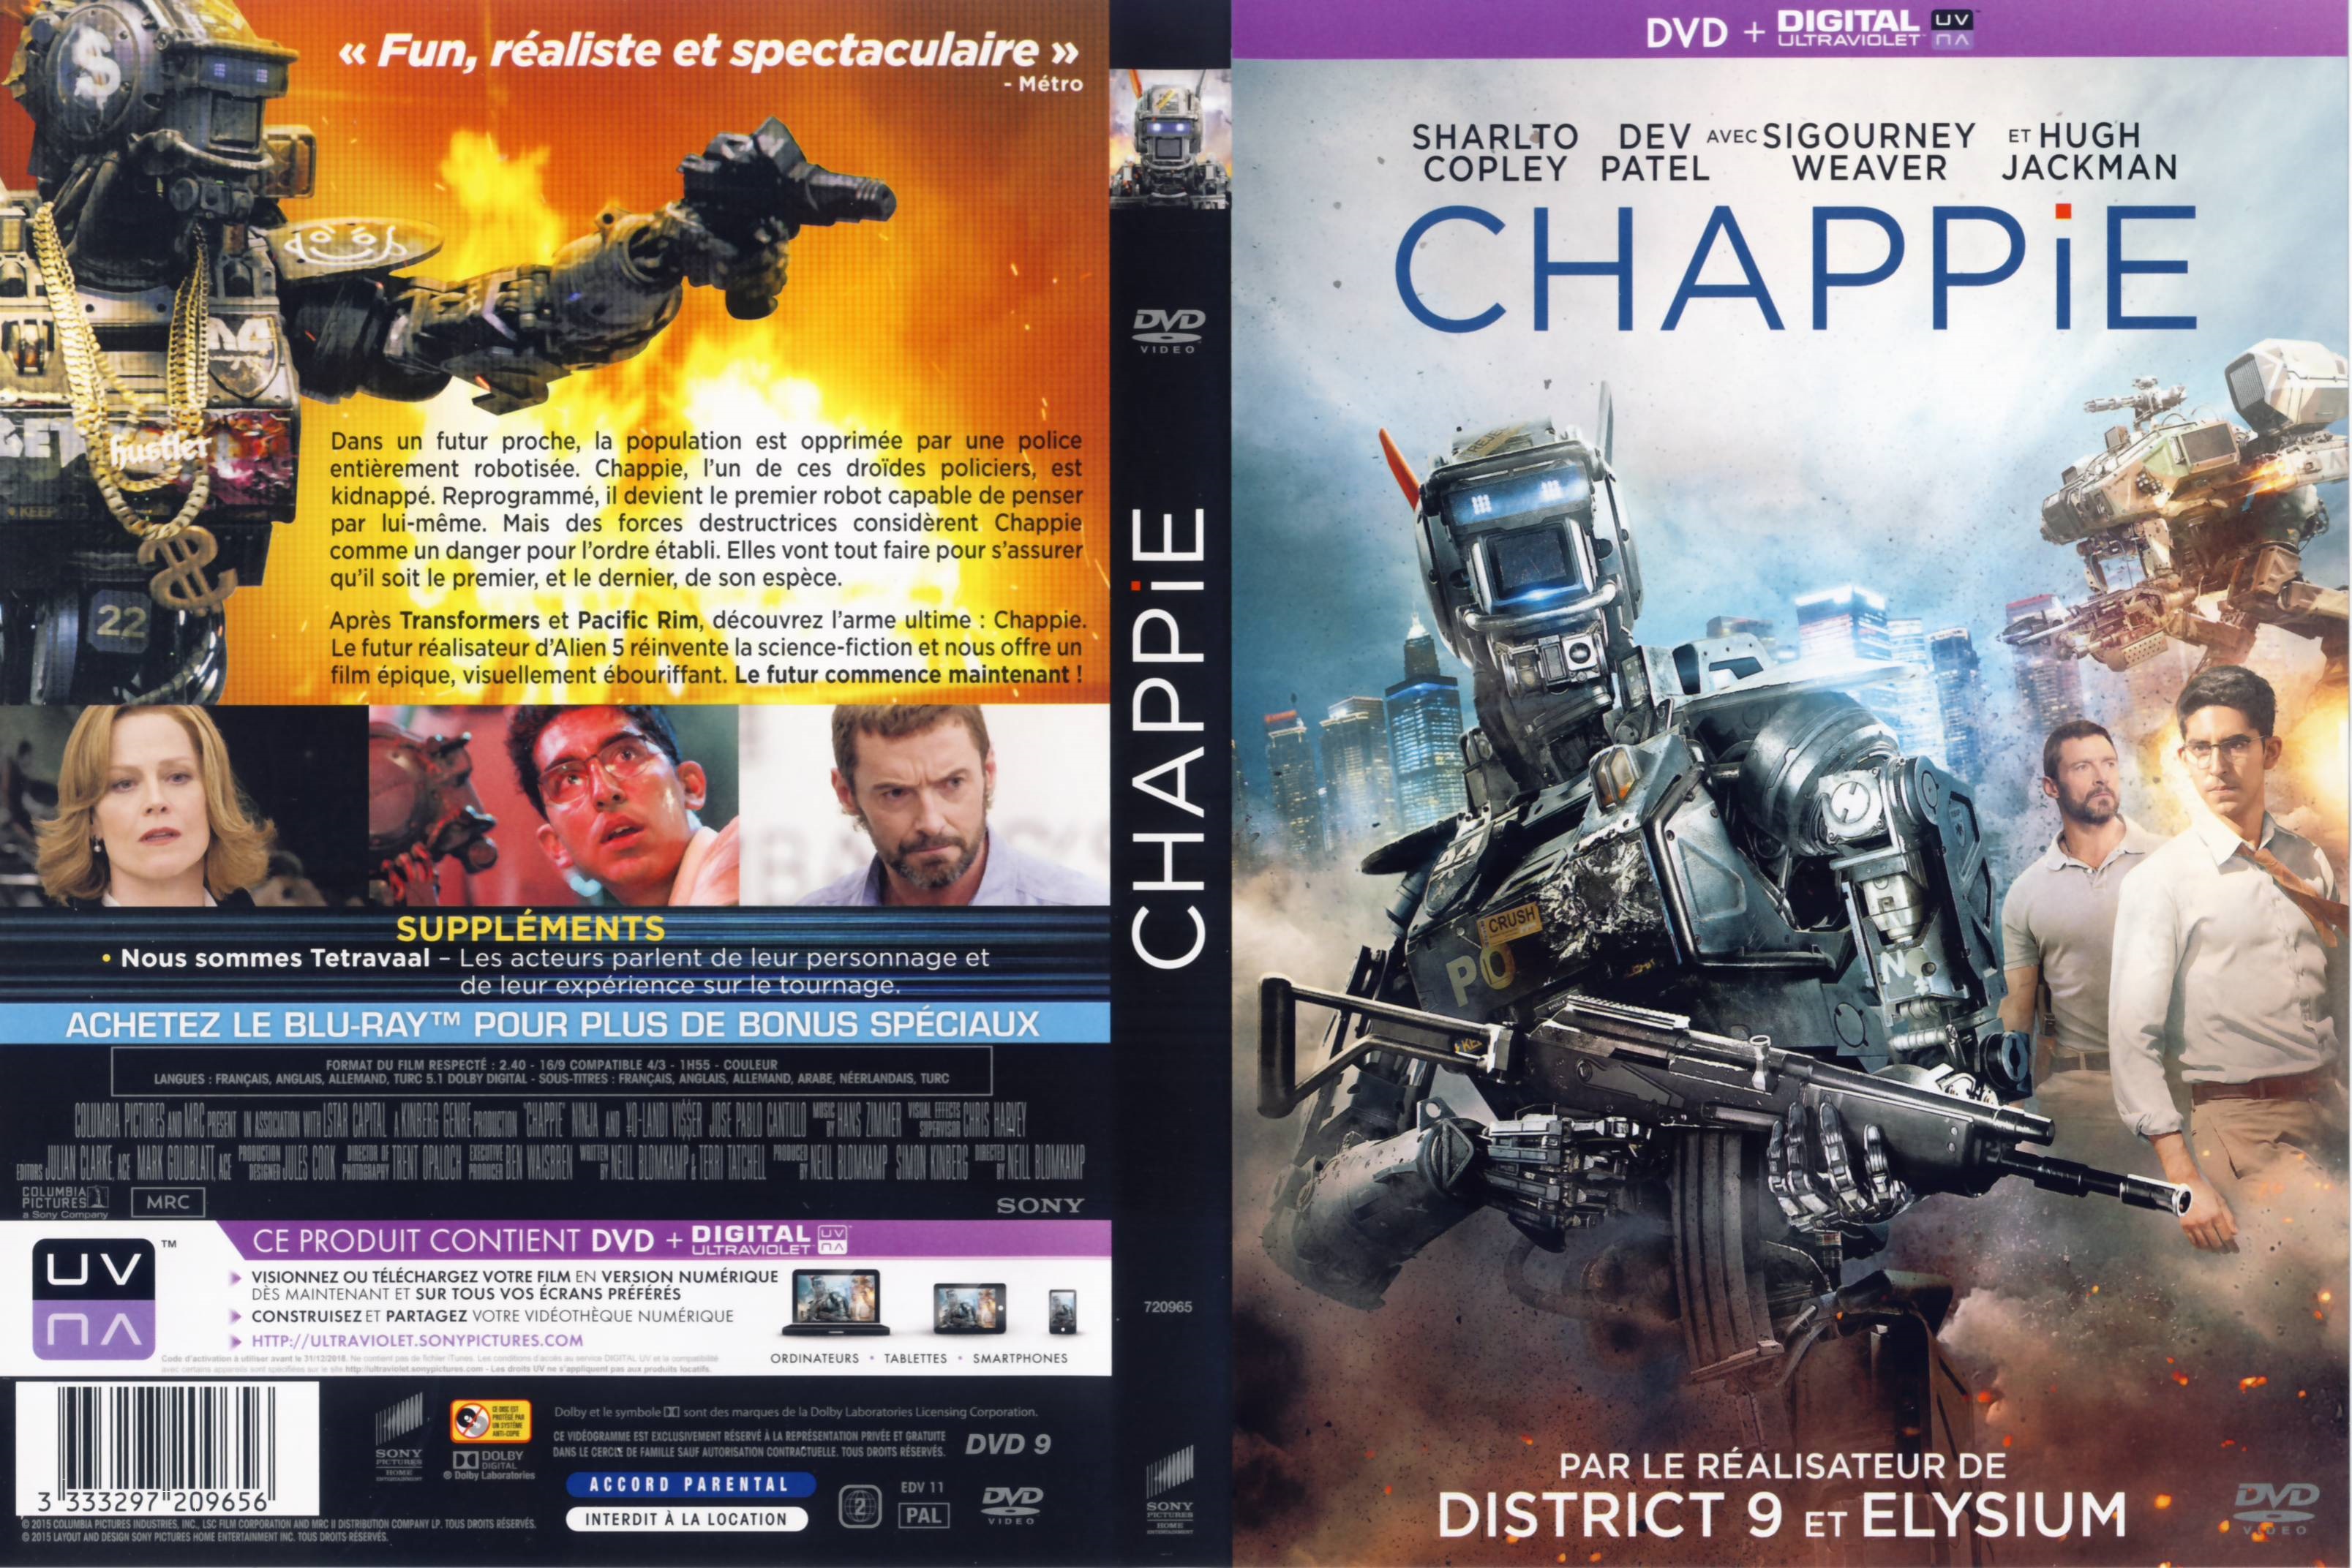 Jaquette DVD Chappie